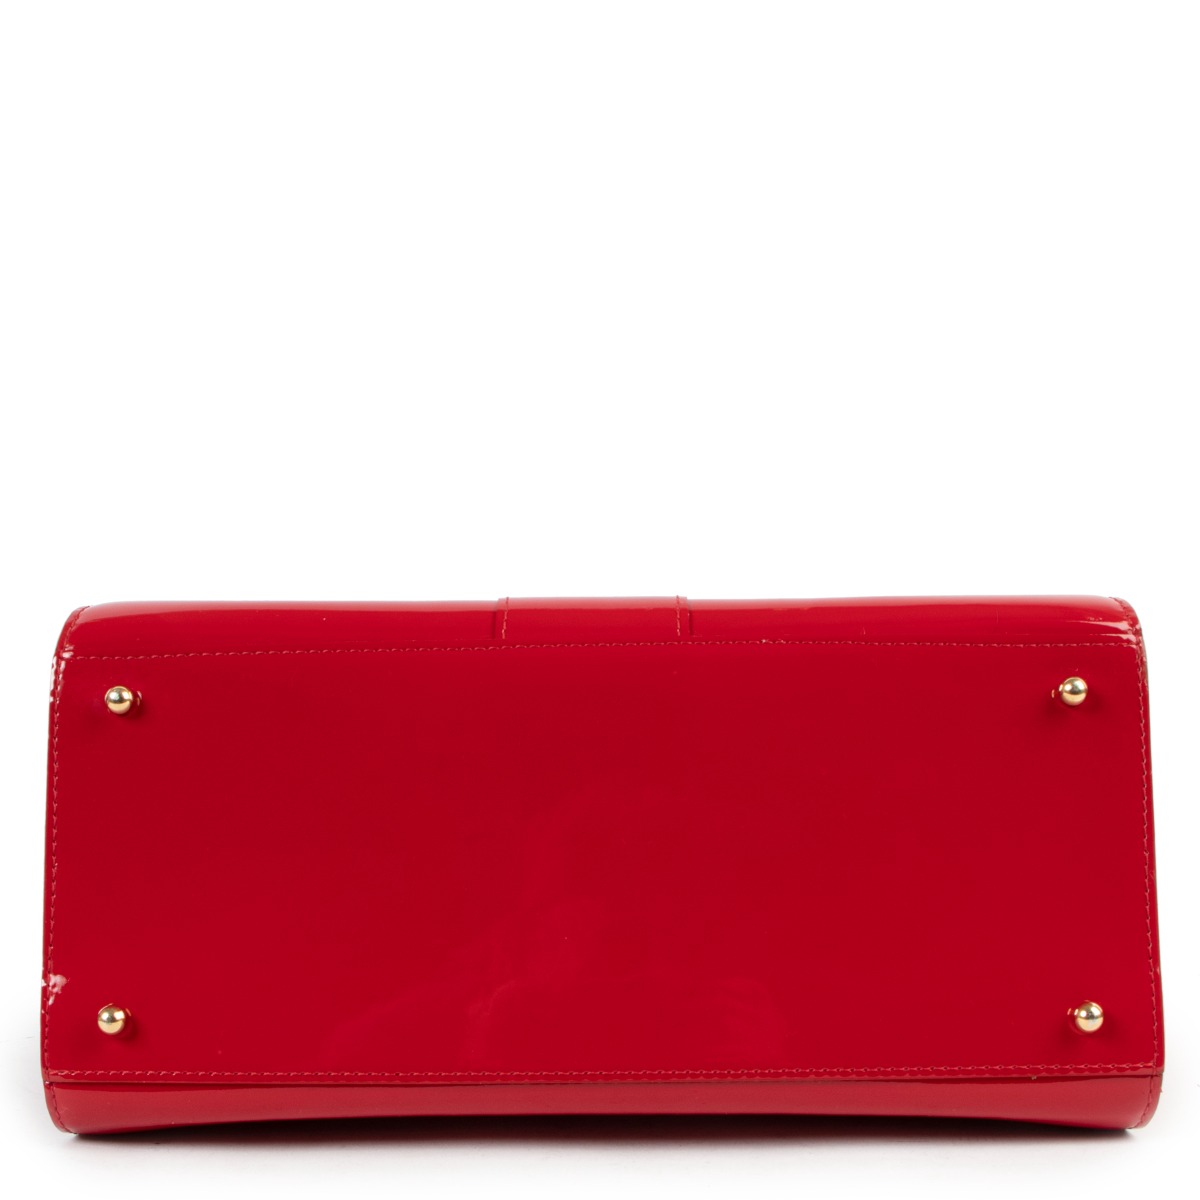 A Delvaux Brillant MM red leather handbag, H 21,5 - W 29…